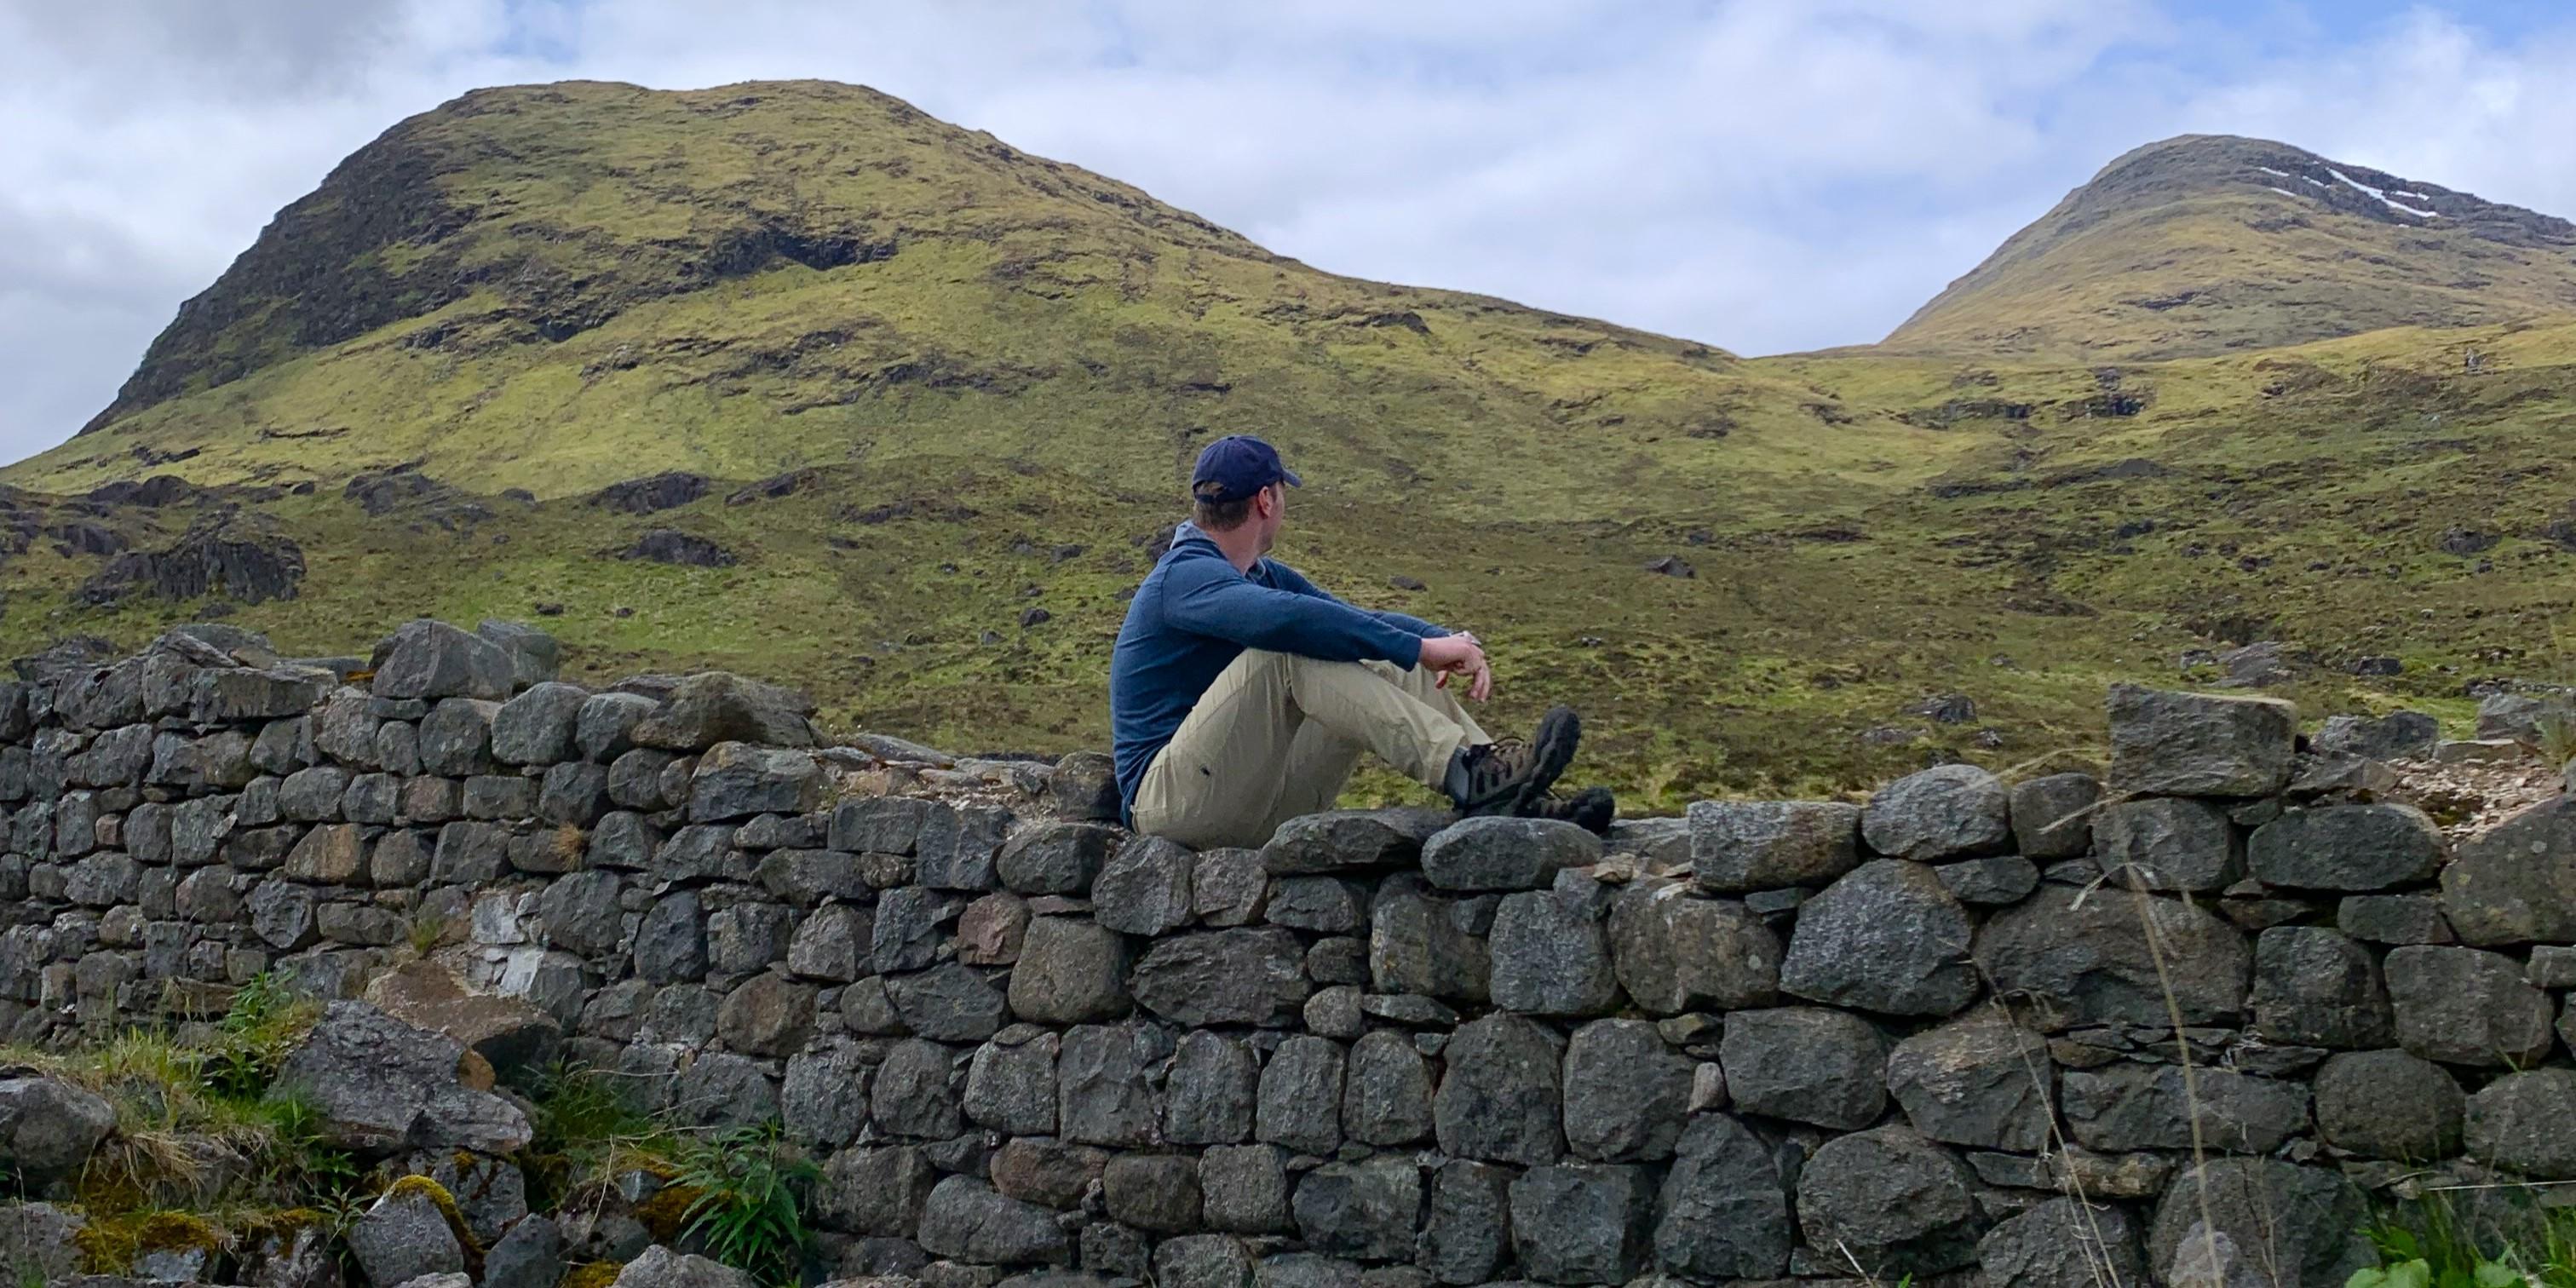 Keenan sitting on a wall in Scotland